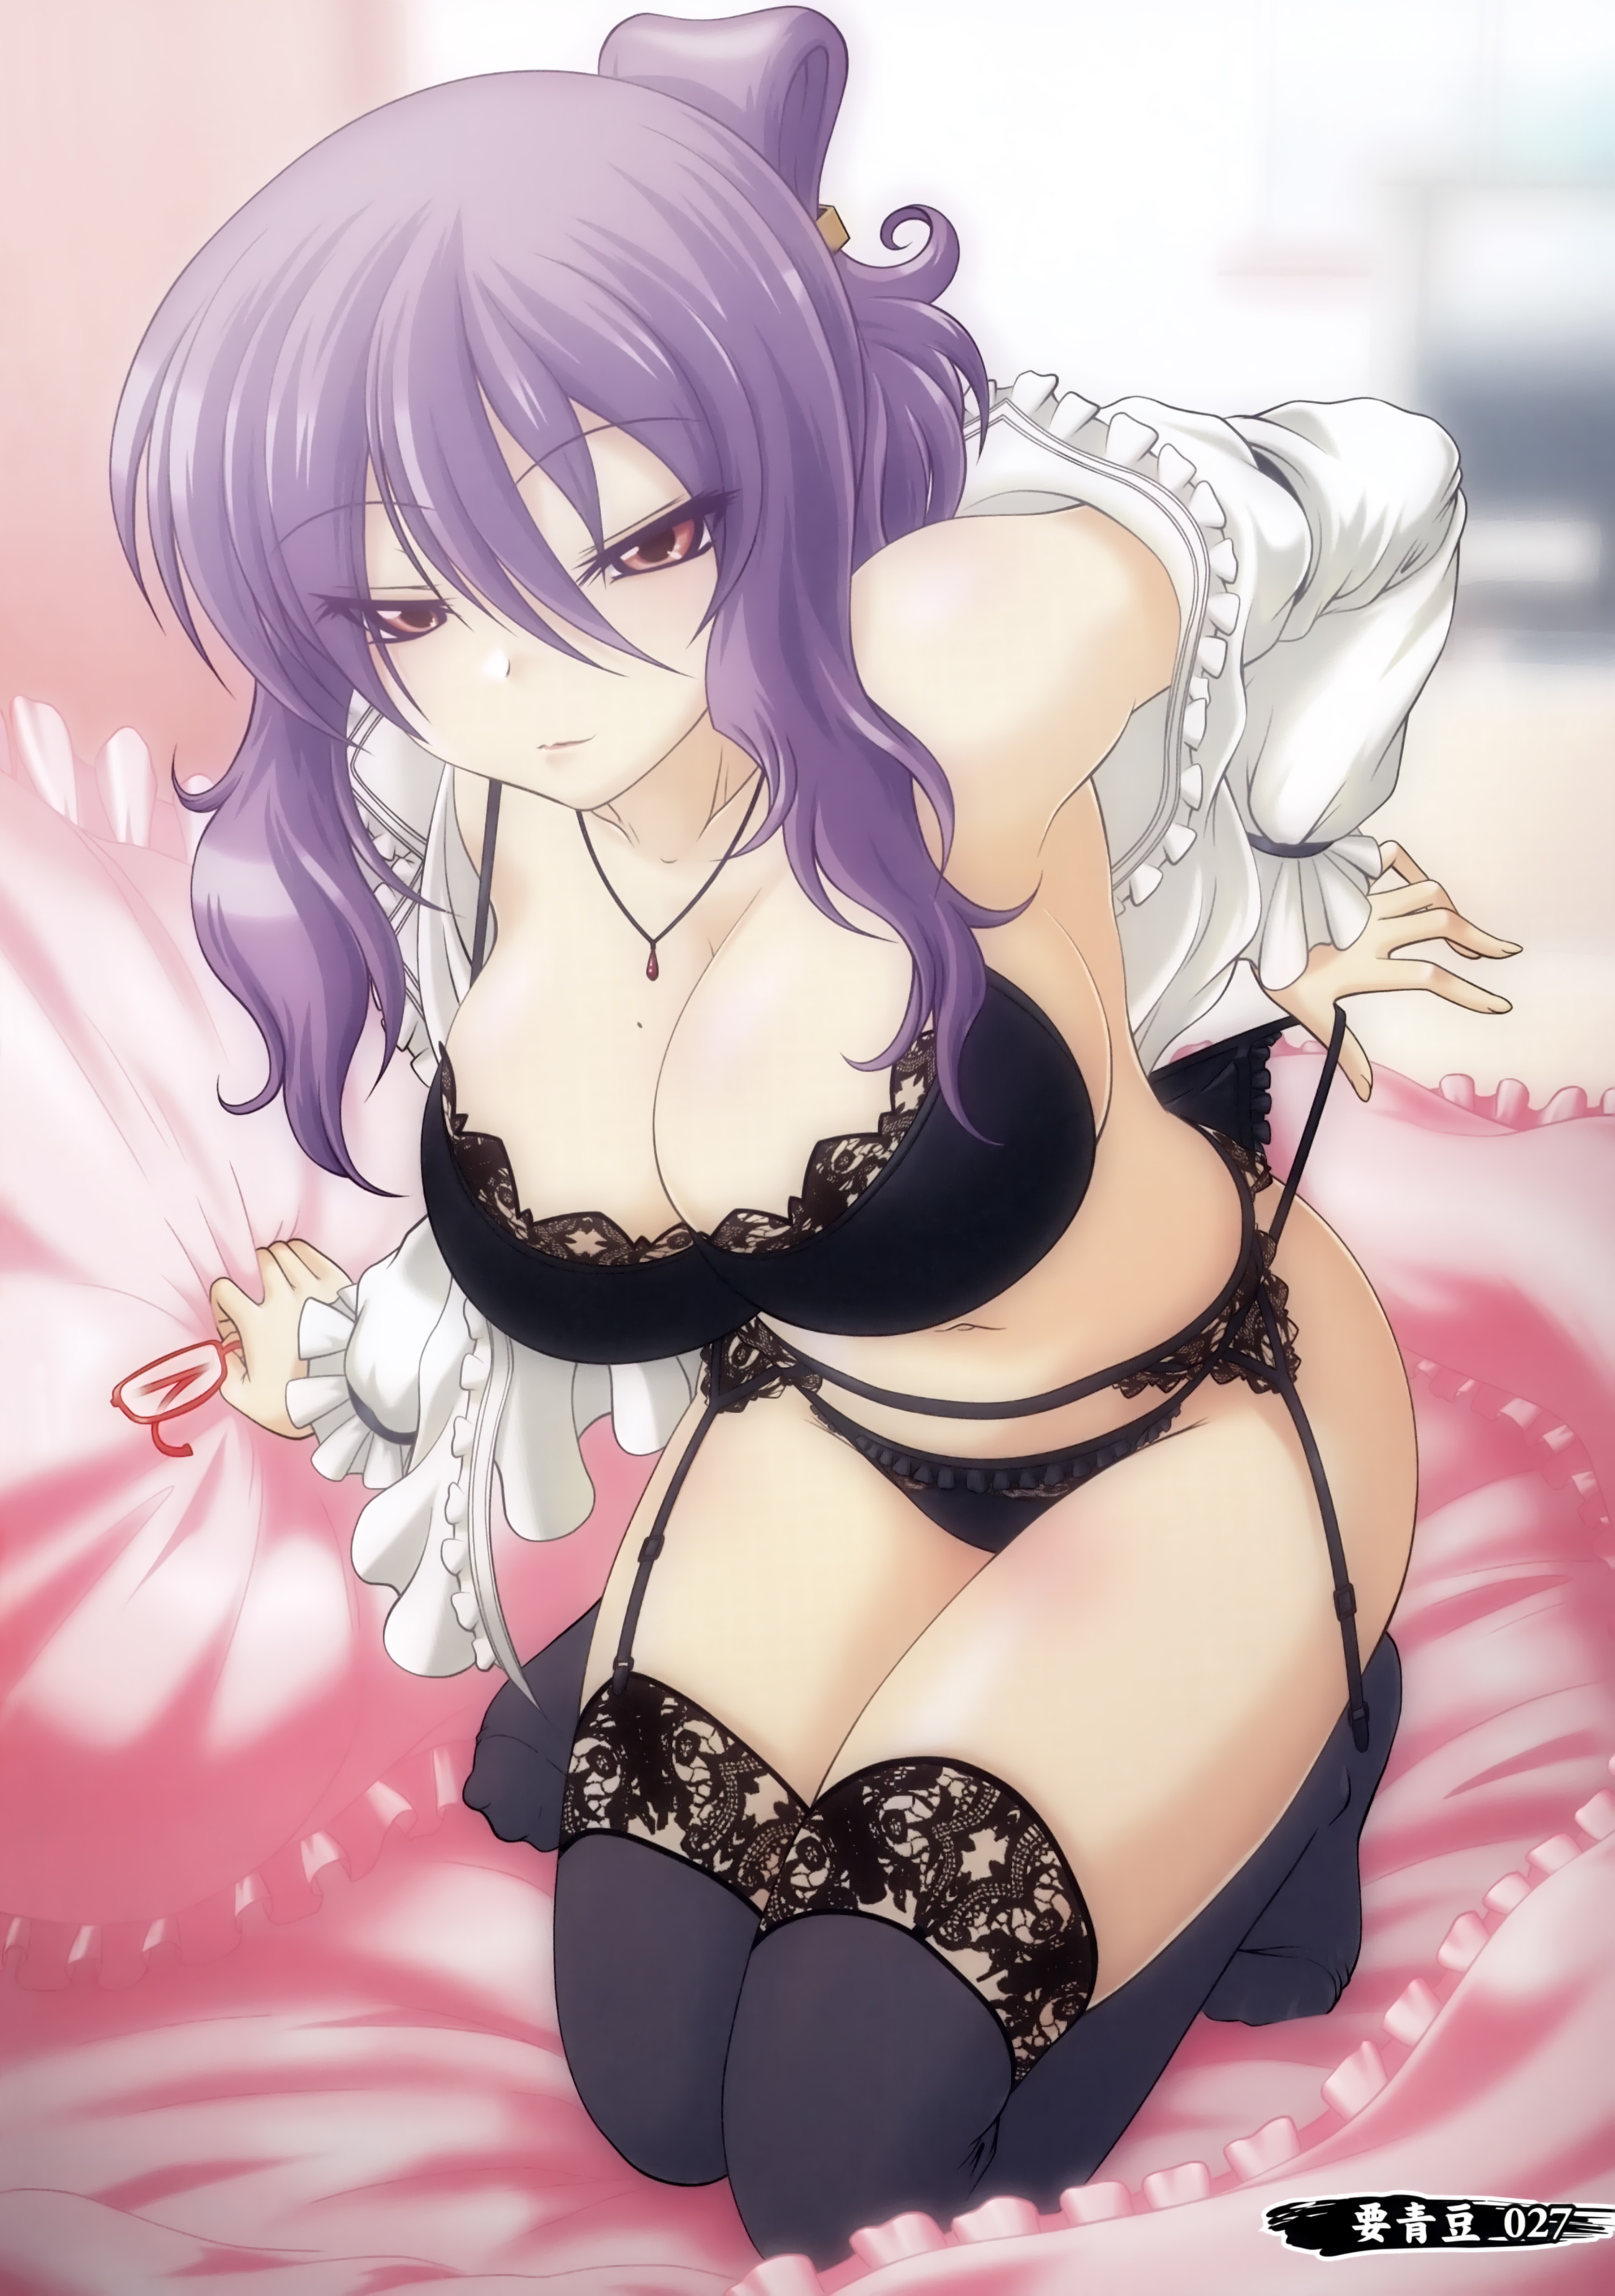 Anime 4963x7057 anime anime girls bra cleavage stockings Senran Kagura Suzune (Senran Kagura) Kaname Aomame purple hair lingerie open shirt kneeling boobs big boobs panties